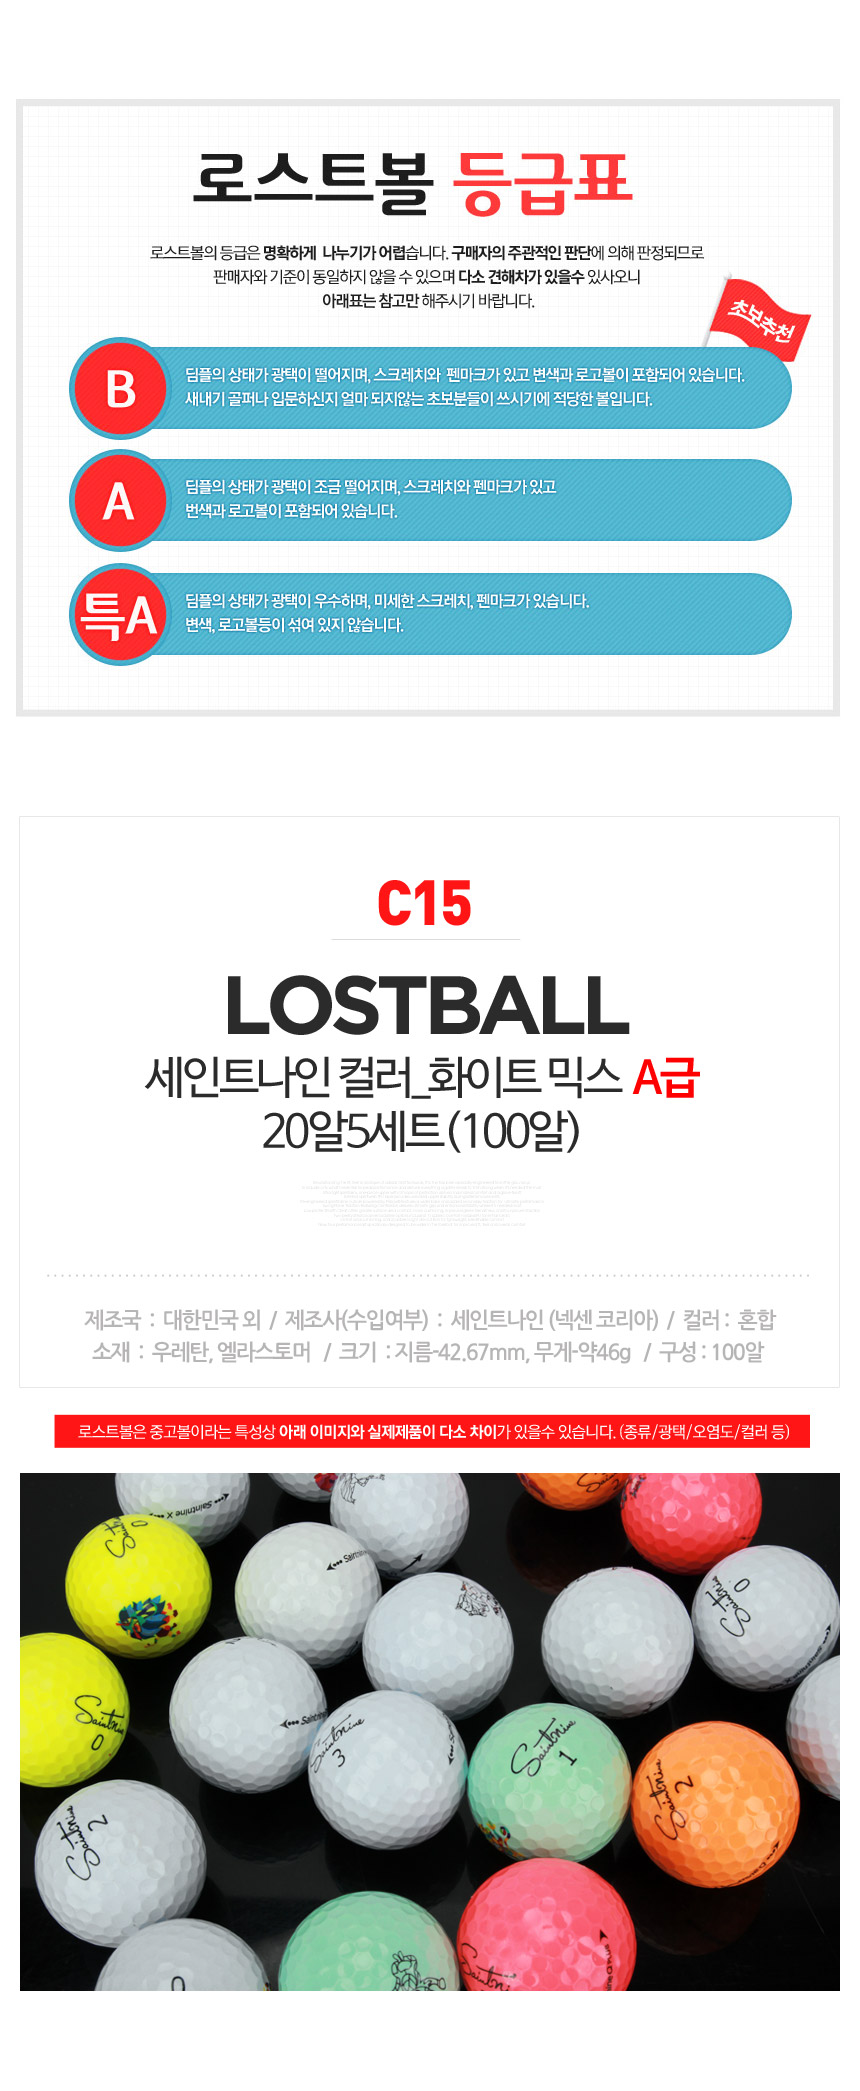 lostball_36_c15_ah_100_19.jpg